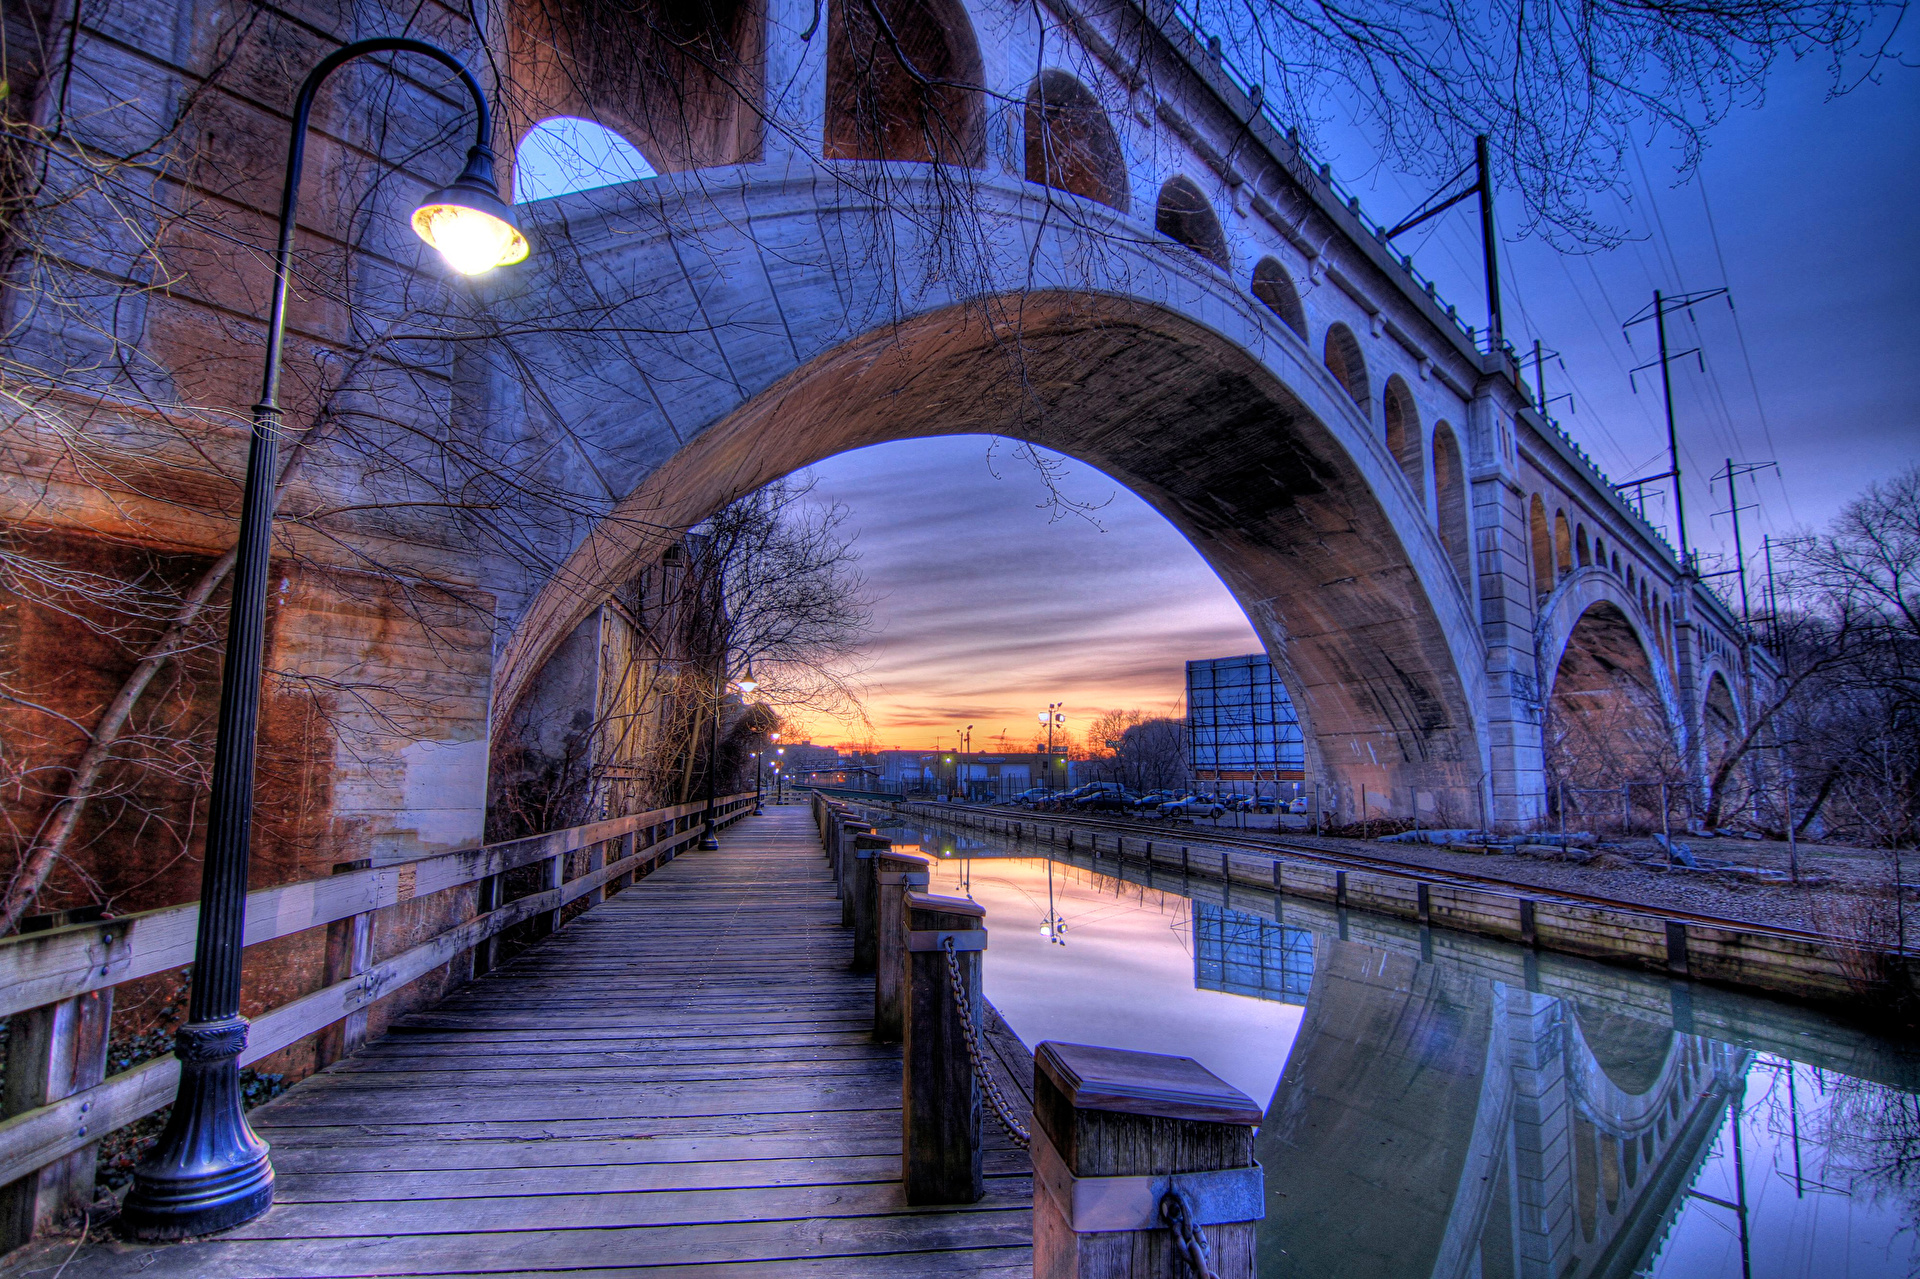 Picture Usa Manayunk Philadelphia Canal Bridges Rivers Evening